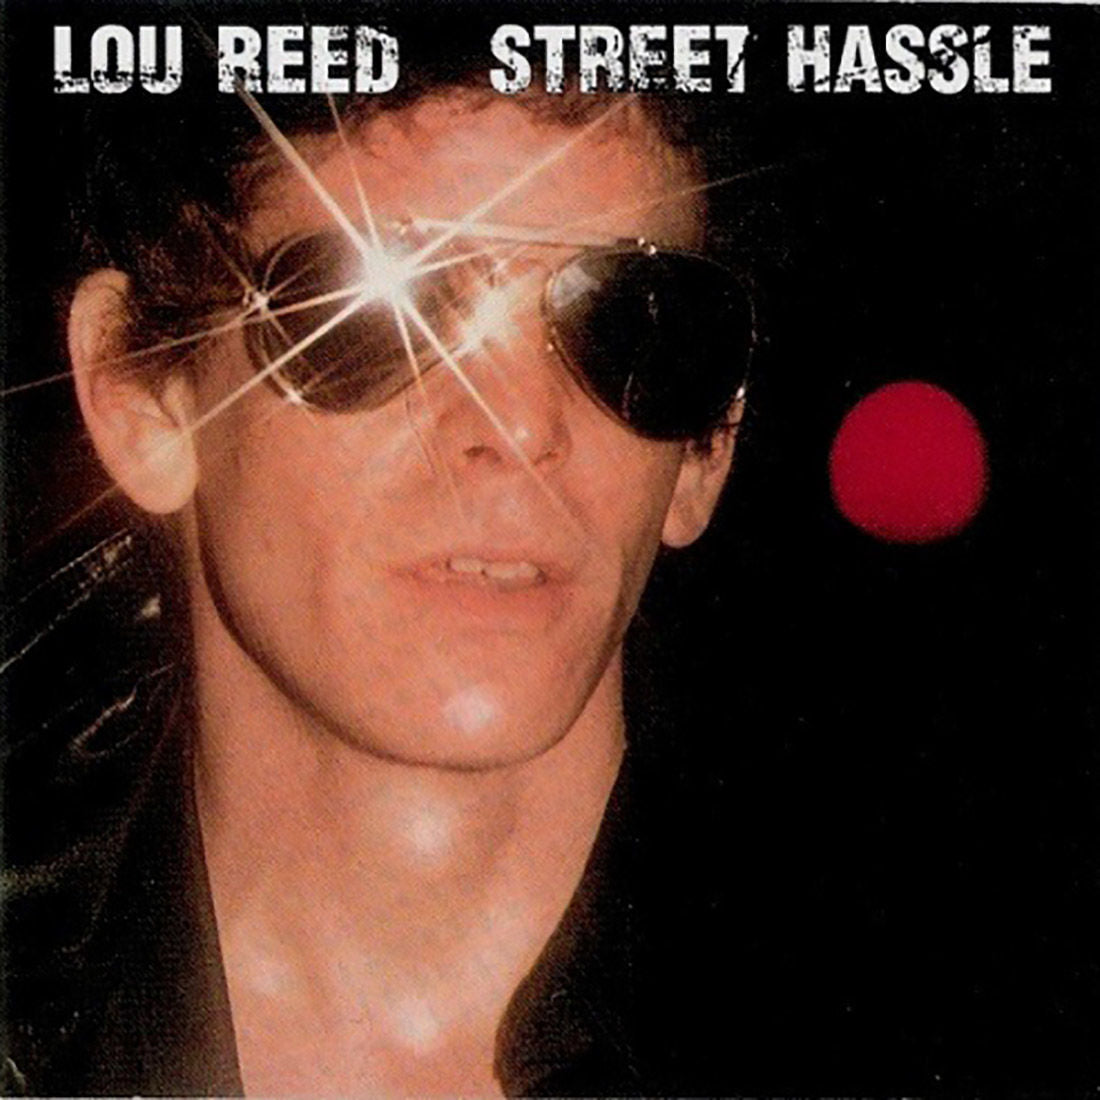 Street Hassle: Vinyl LP